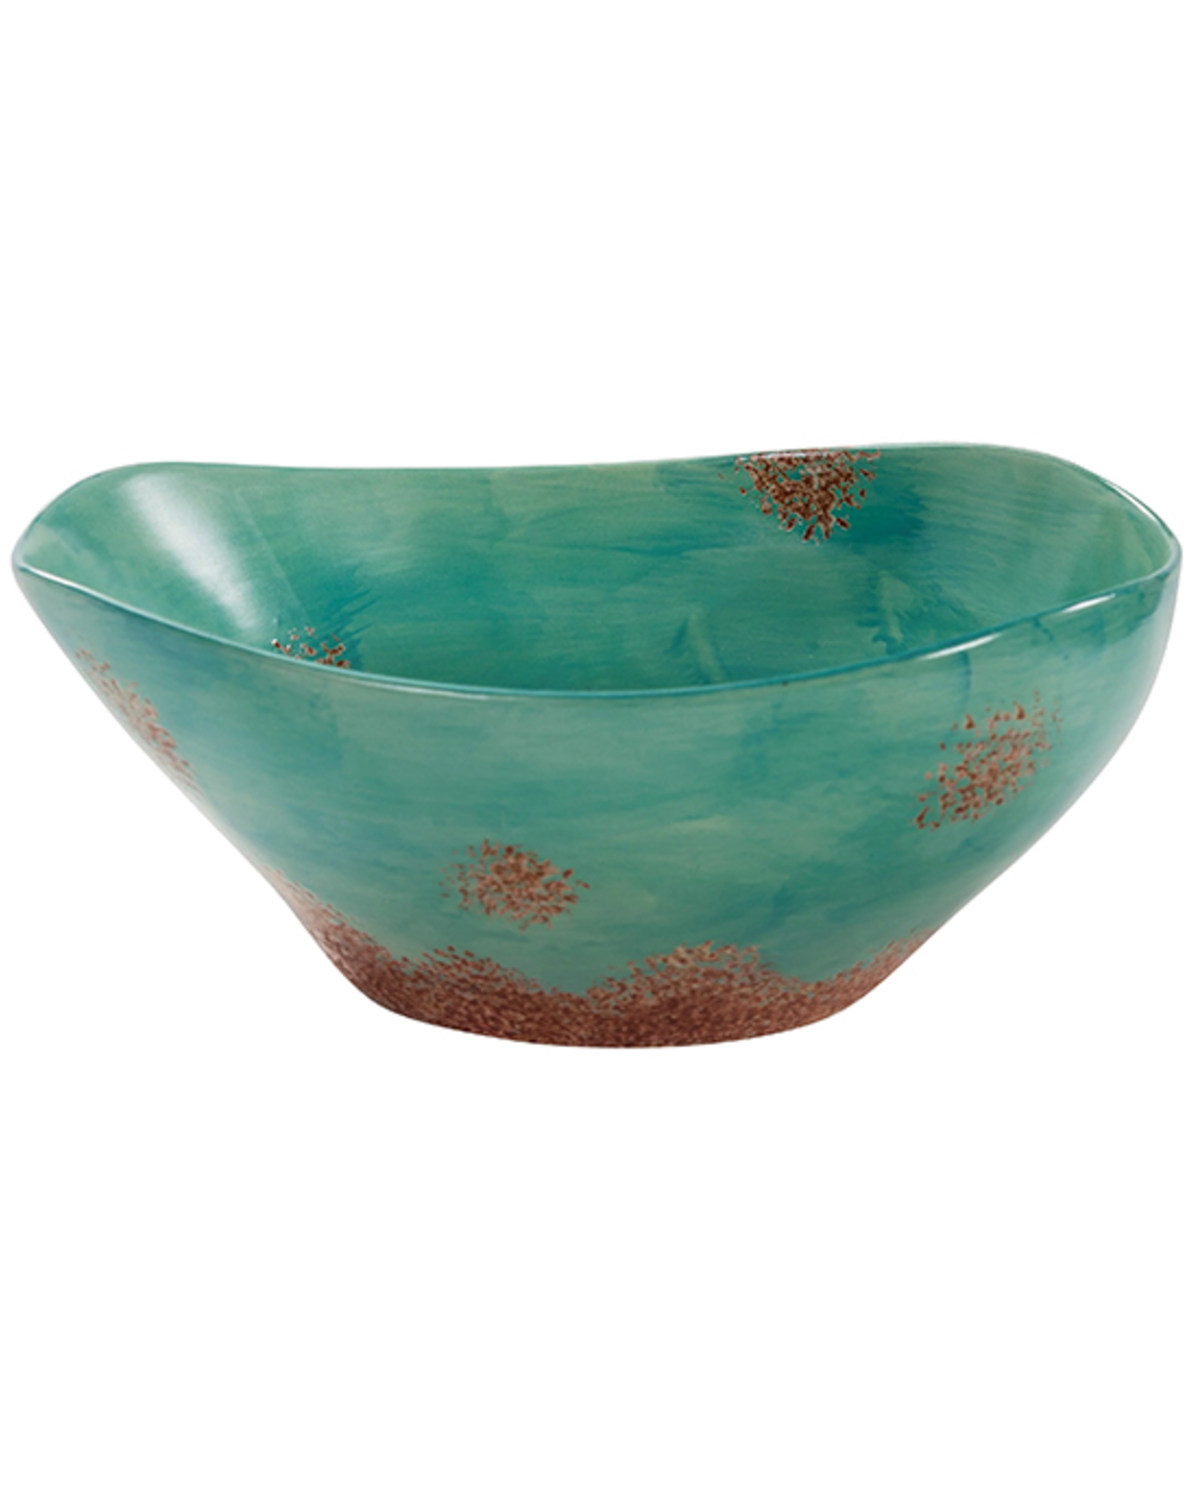 HiEnd Accents Patina Ceramic Serving Bowl